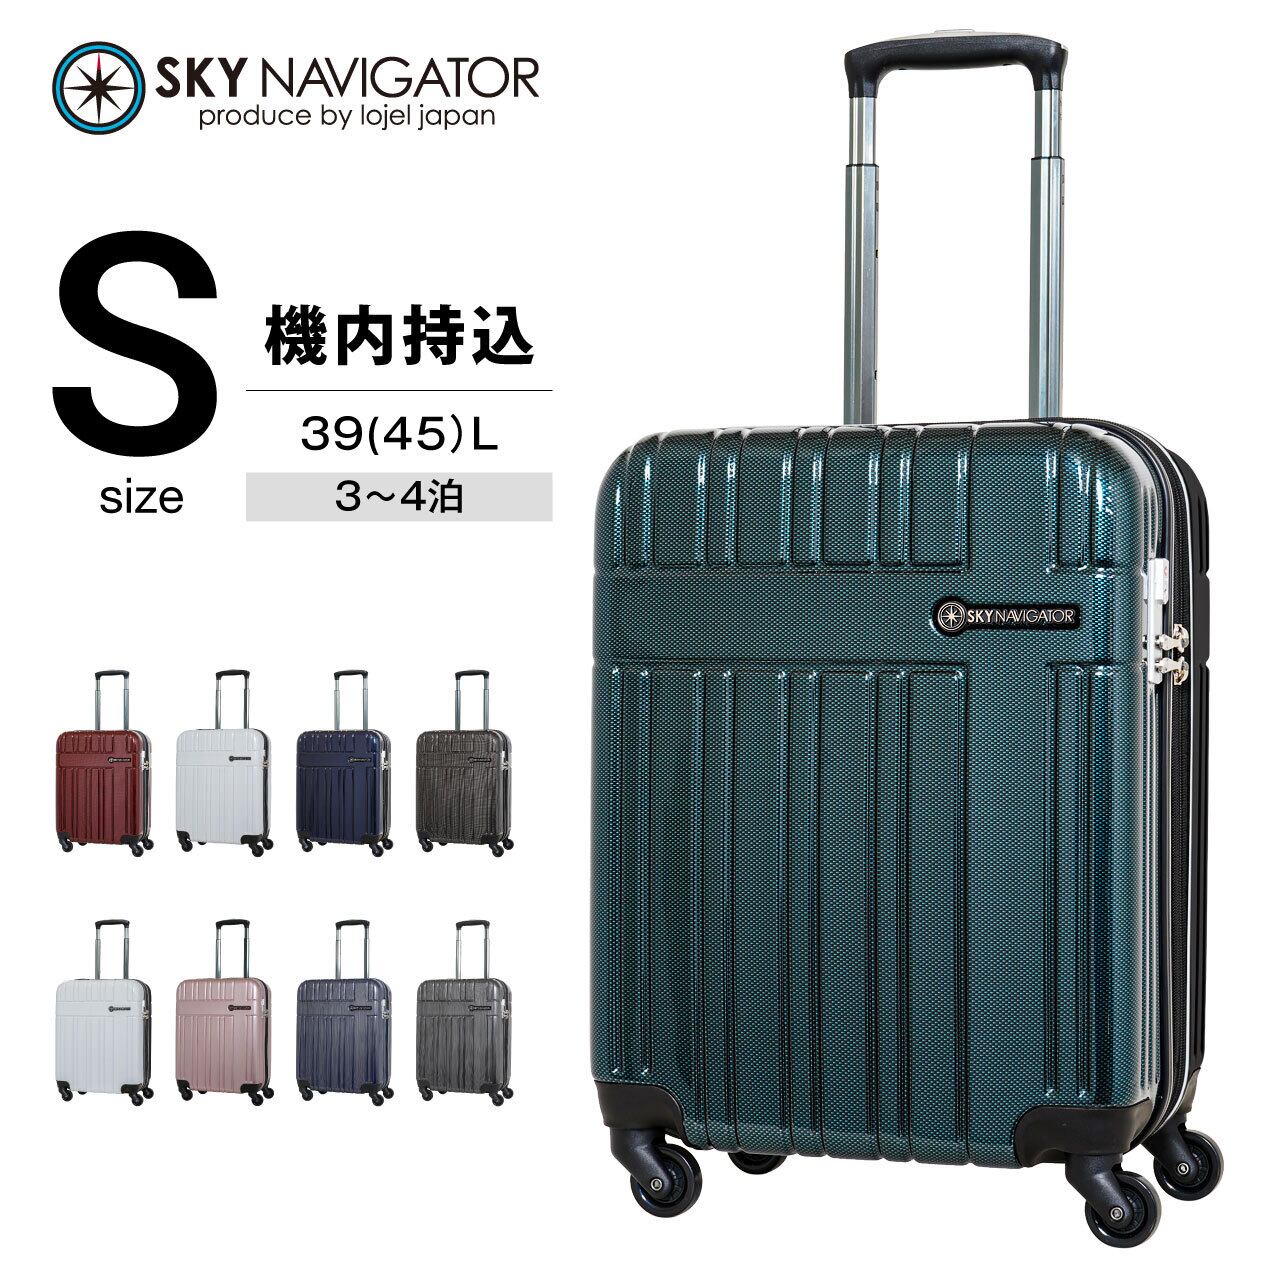 SK-0835-48 SKYNAVIGATOR スーツケース Sサイズ 機内持ち込み 拡張 ...